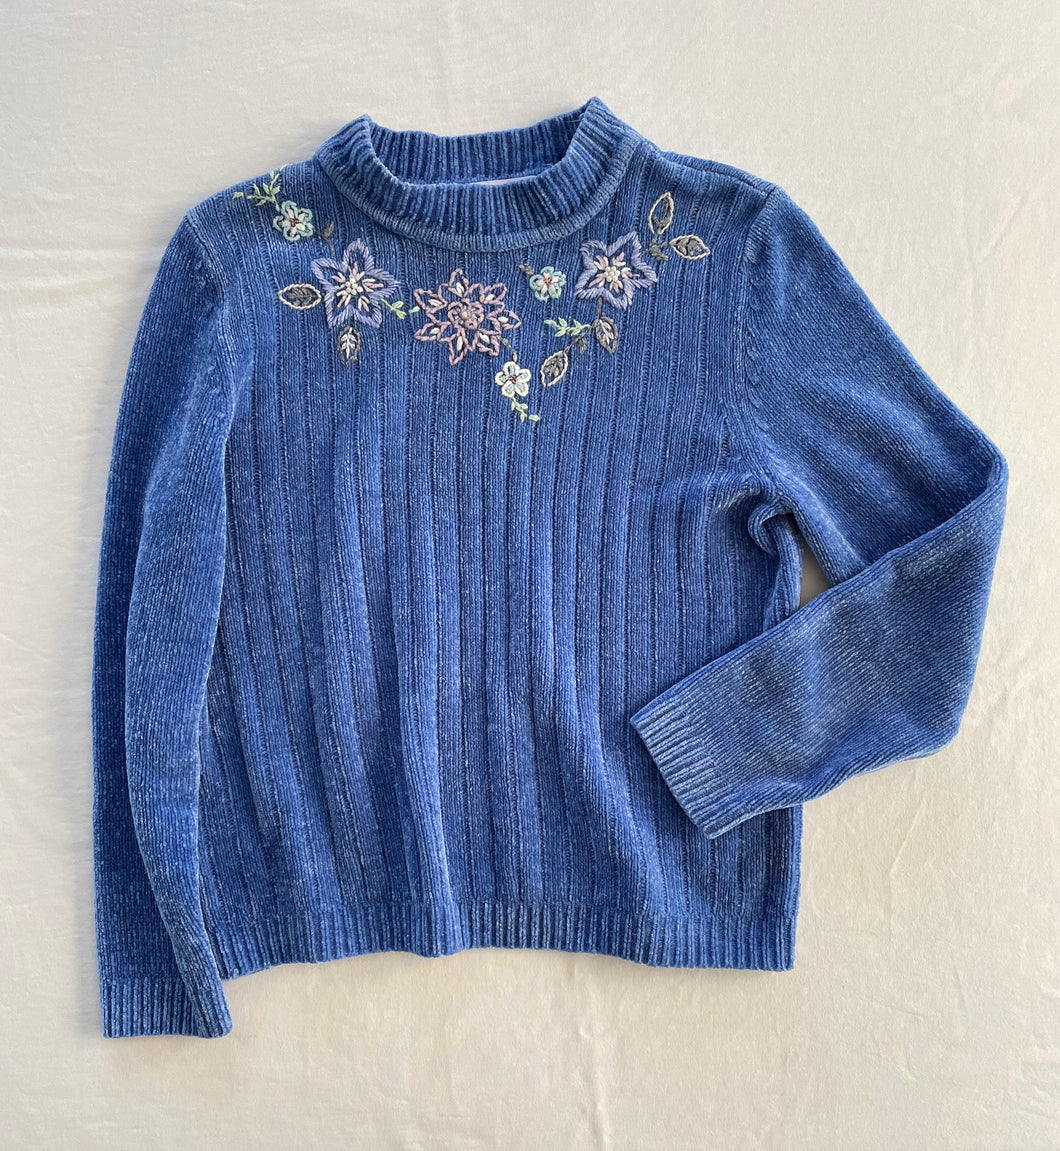 Vintage ‘Alfred Dunner’ sweater